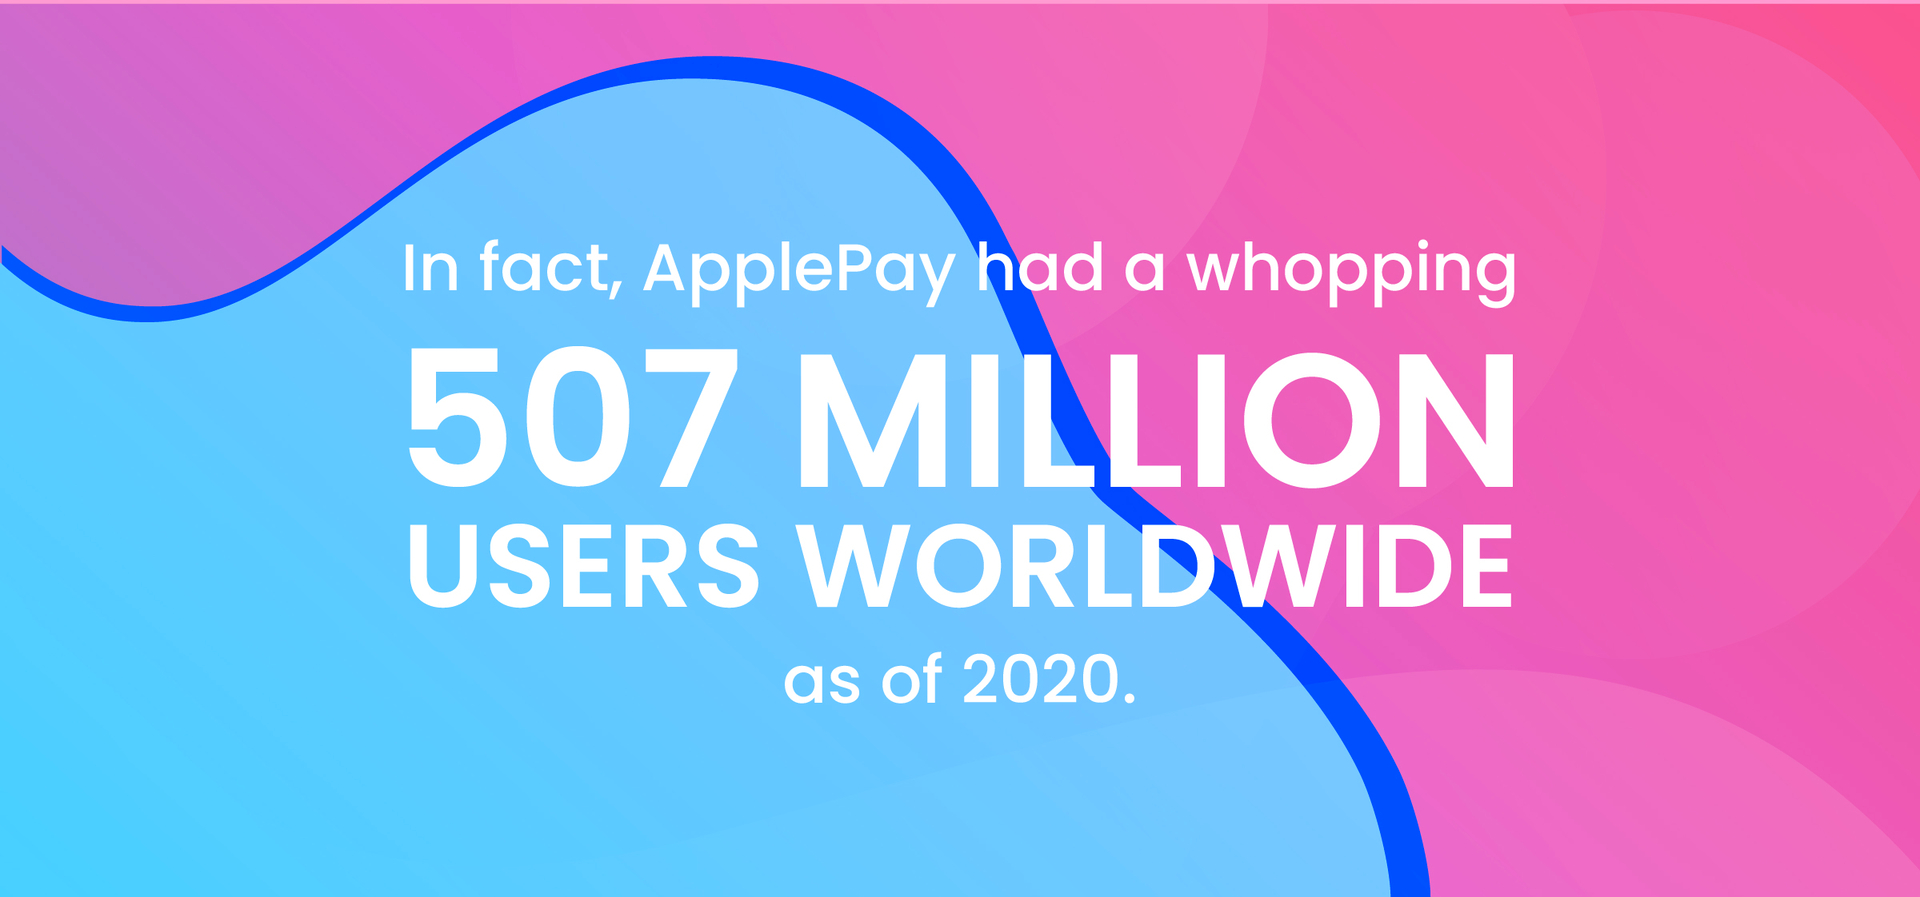 ApplePay had 507 million users worldwide.